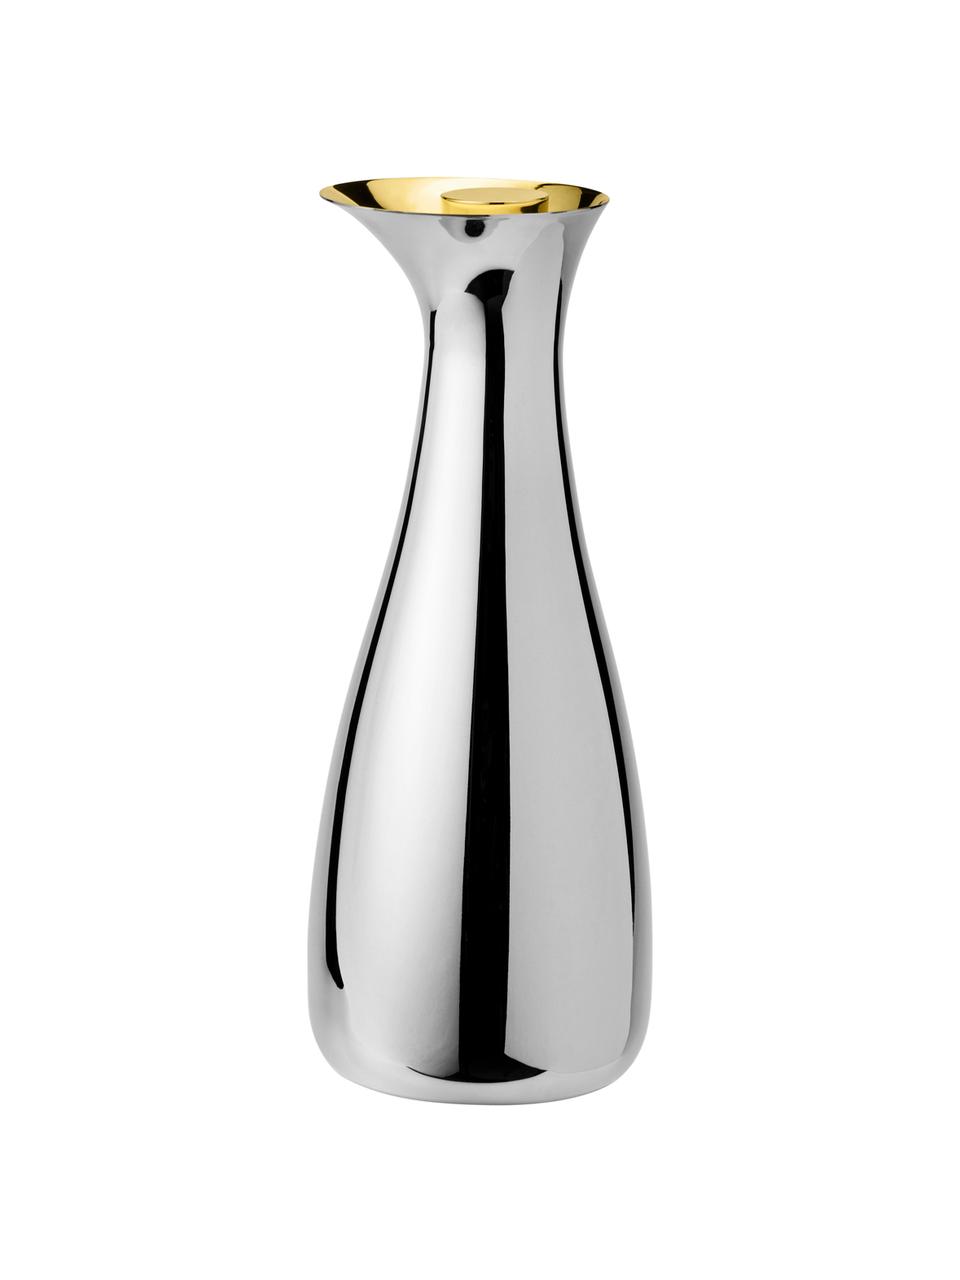 Design Karaffe Foster in Silber/Gold, 1 L, Innen: Edelstahl mit goldfarbene, Edelstahl, Goldfarben, 1 L